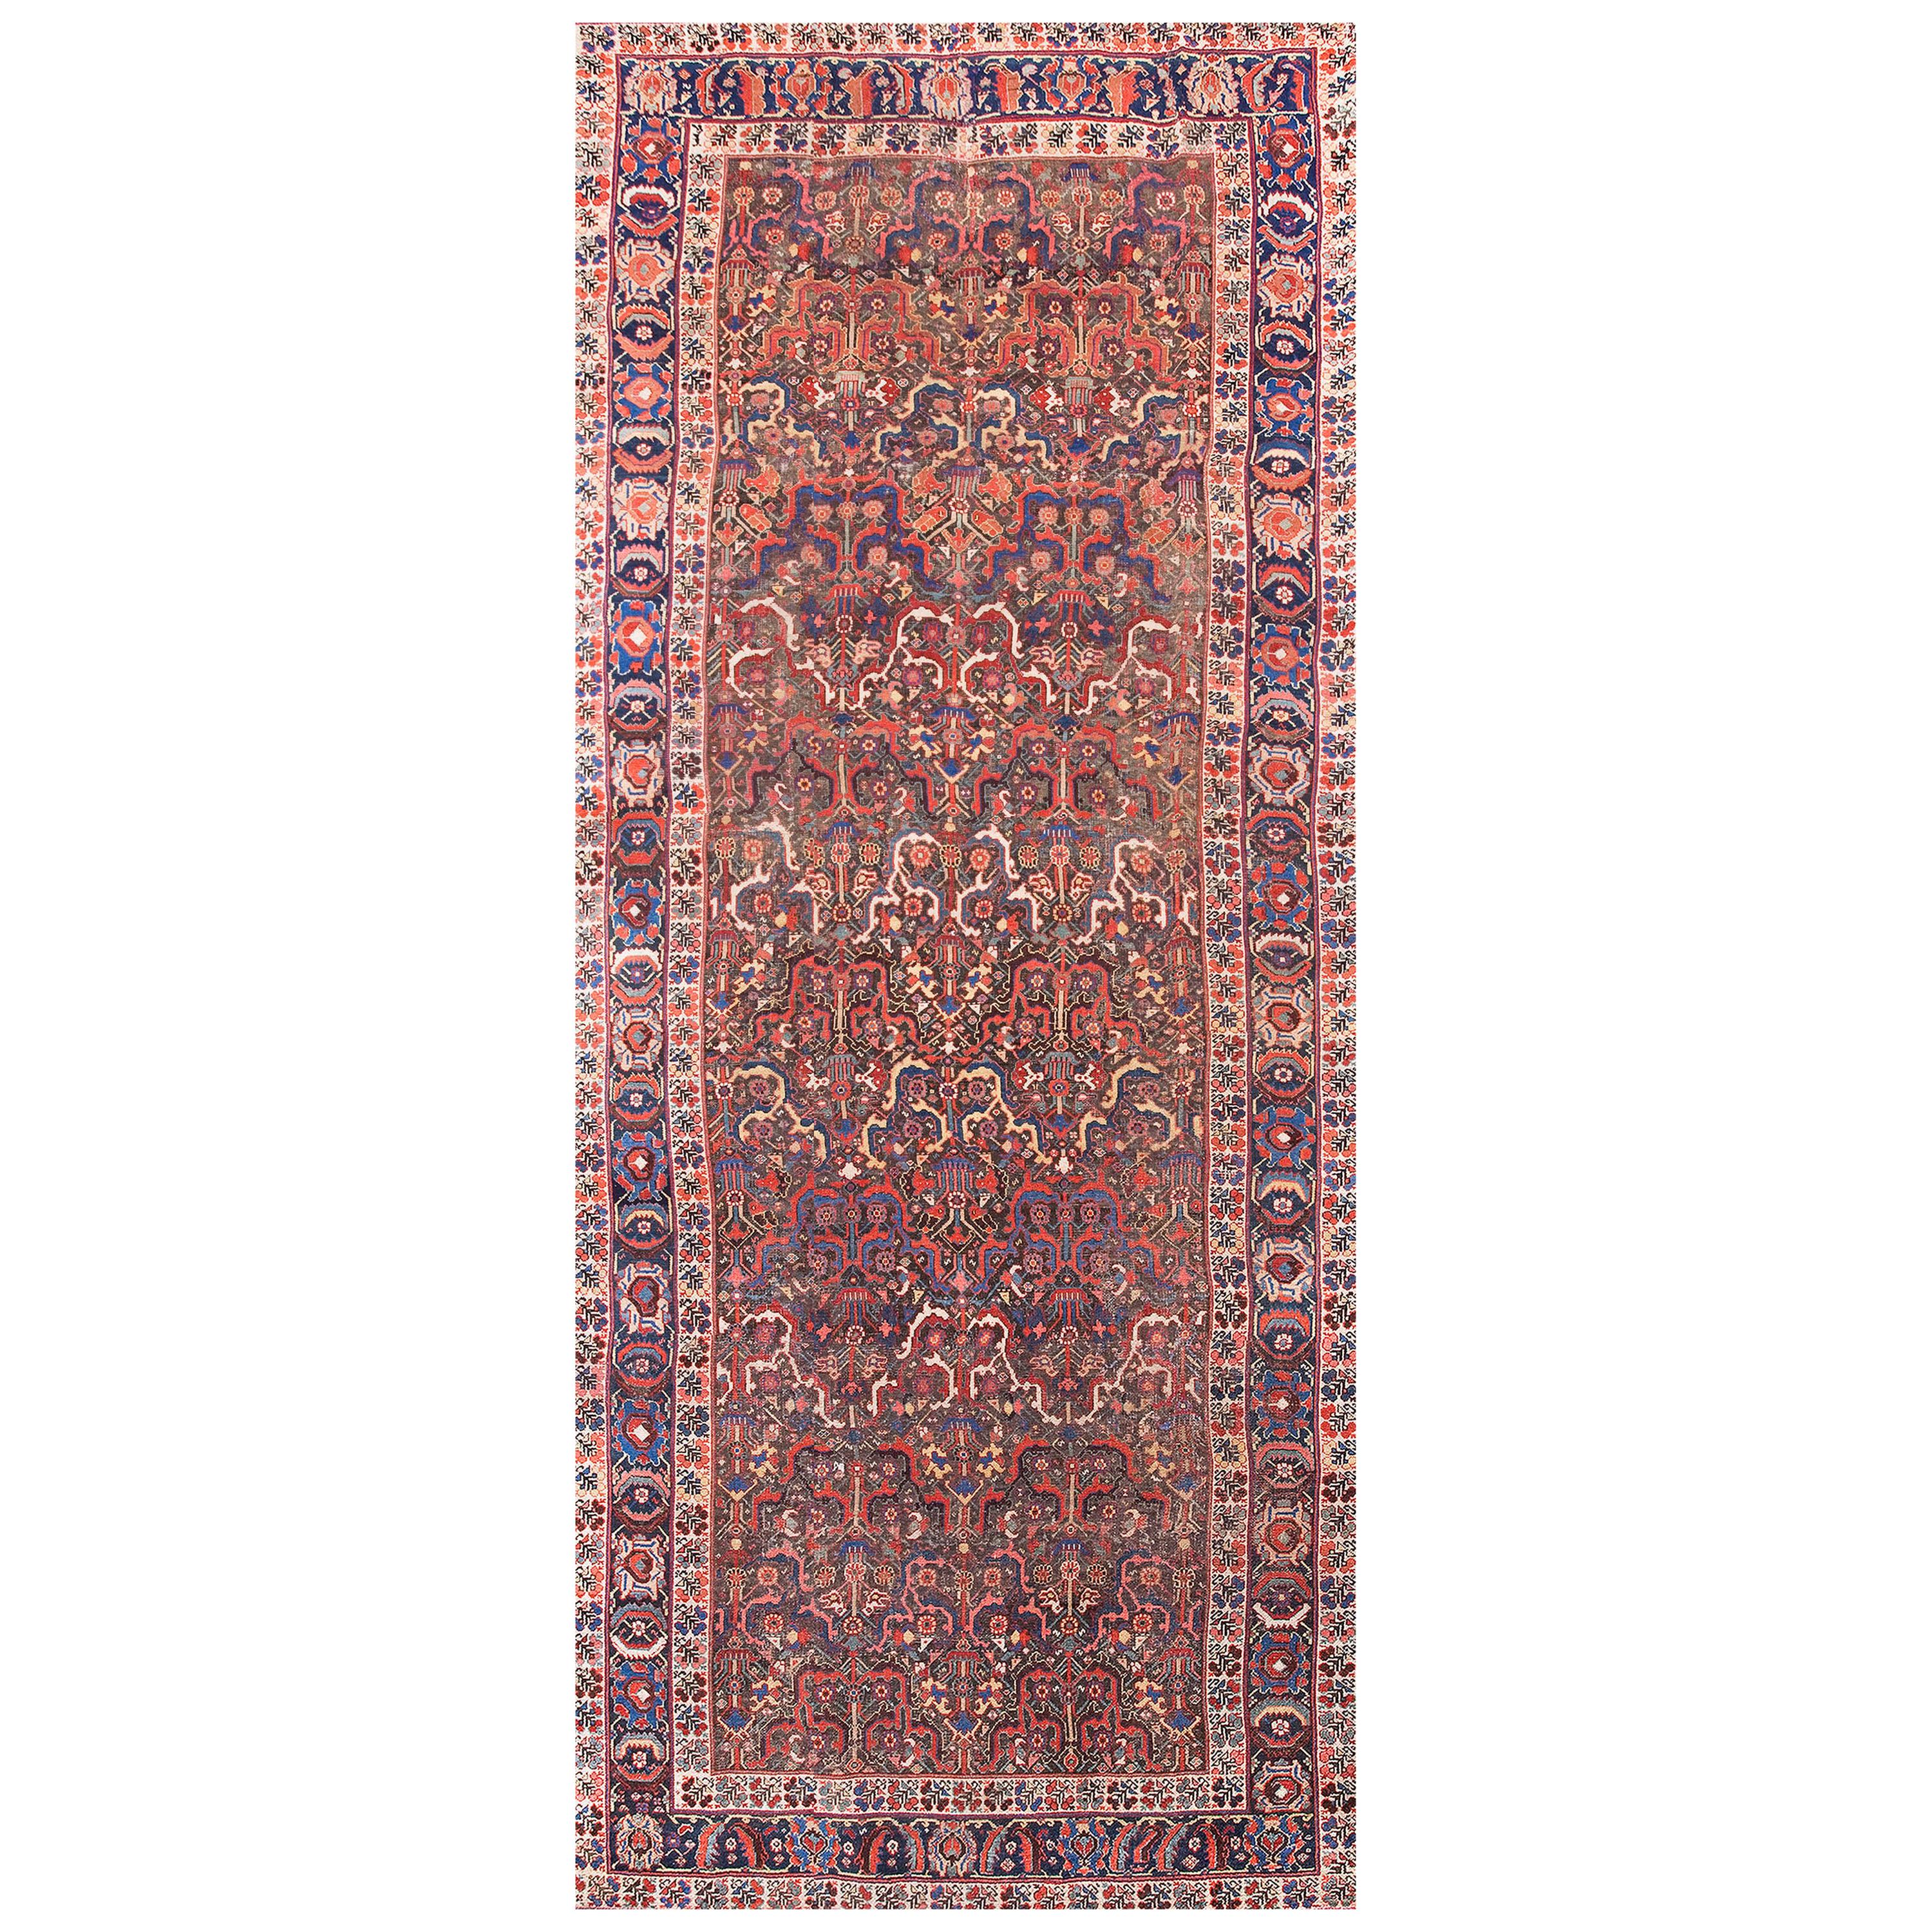 Late 18th Century N.W. Persian Gallery Carpet ( 6'4"x 15'8" - 193 x 478 )